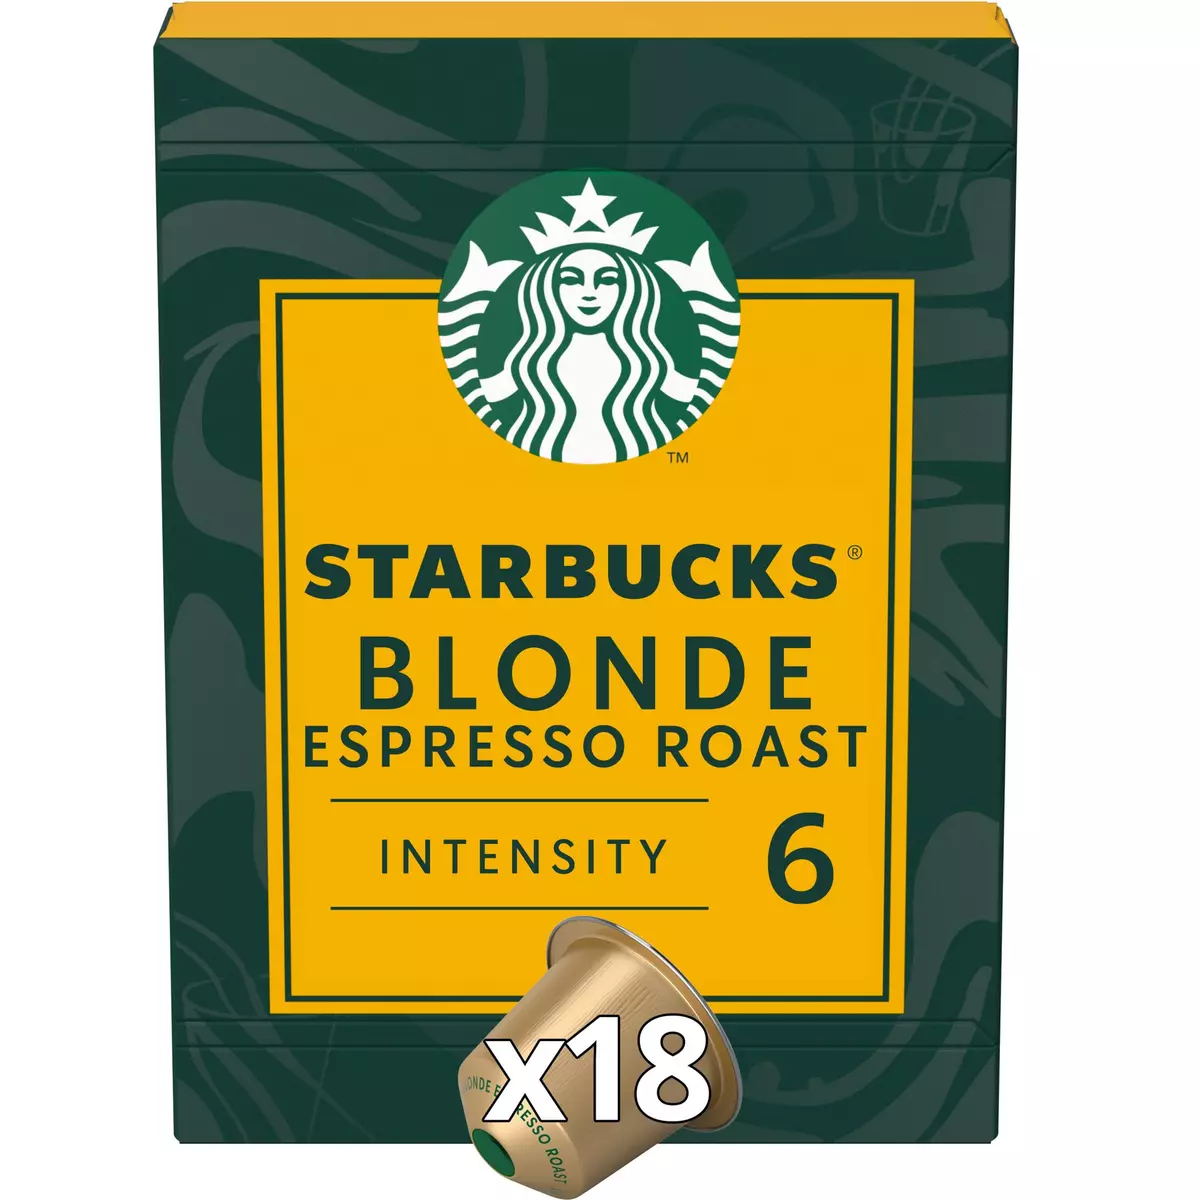 STARBUCKS Capsules de café blonde espresso roast intensité 6 compatibles Nespresso 18 capsules 94g